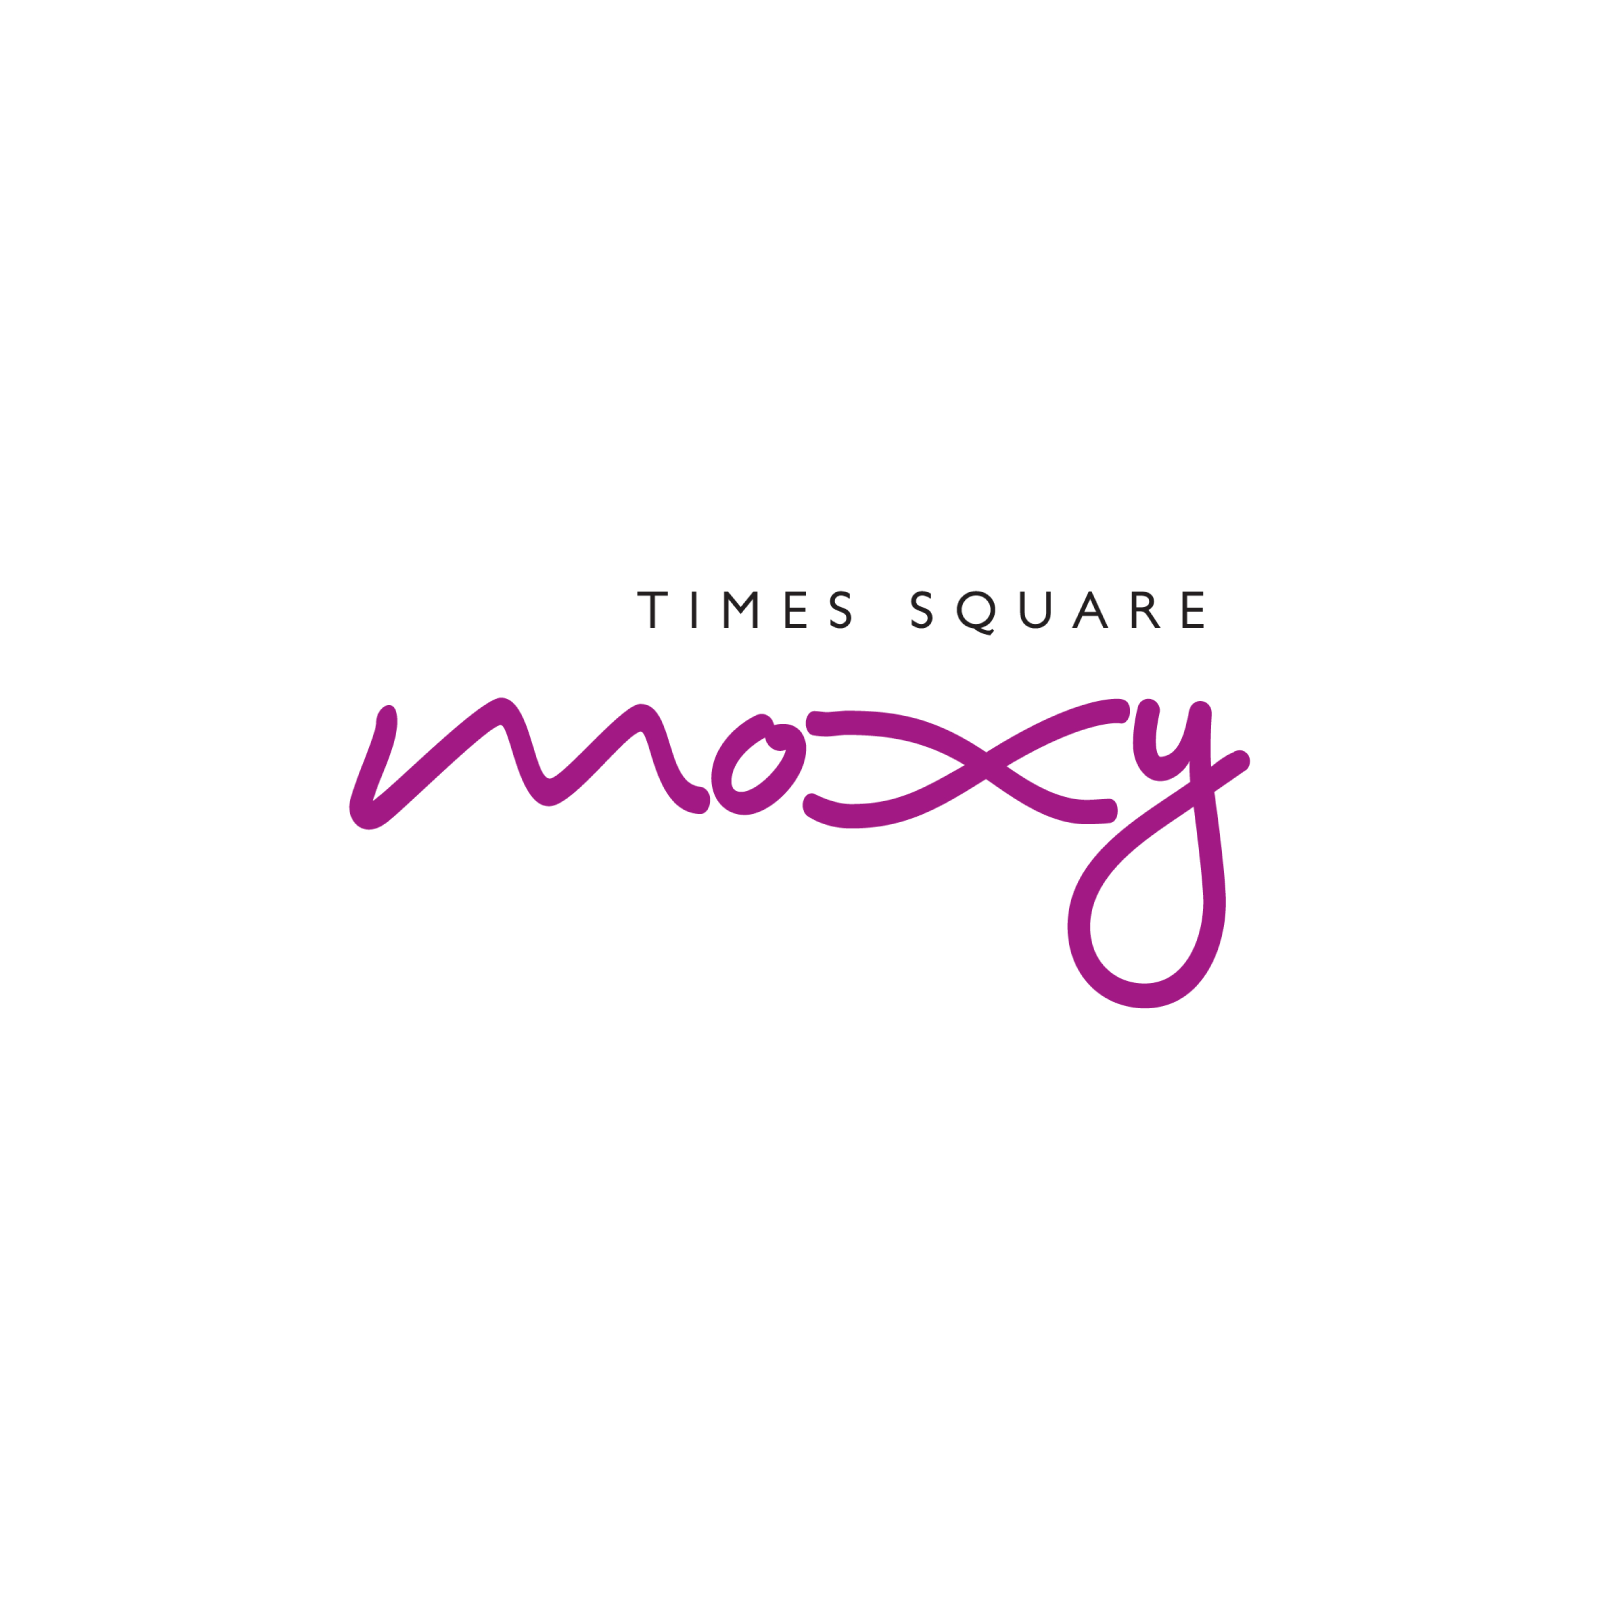 Moxy Times Square